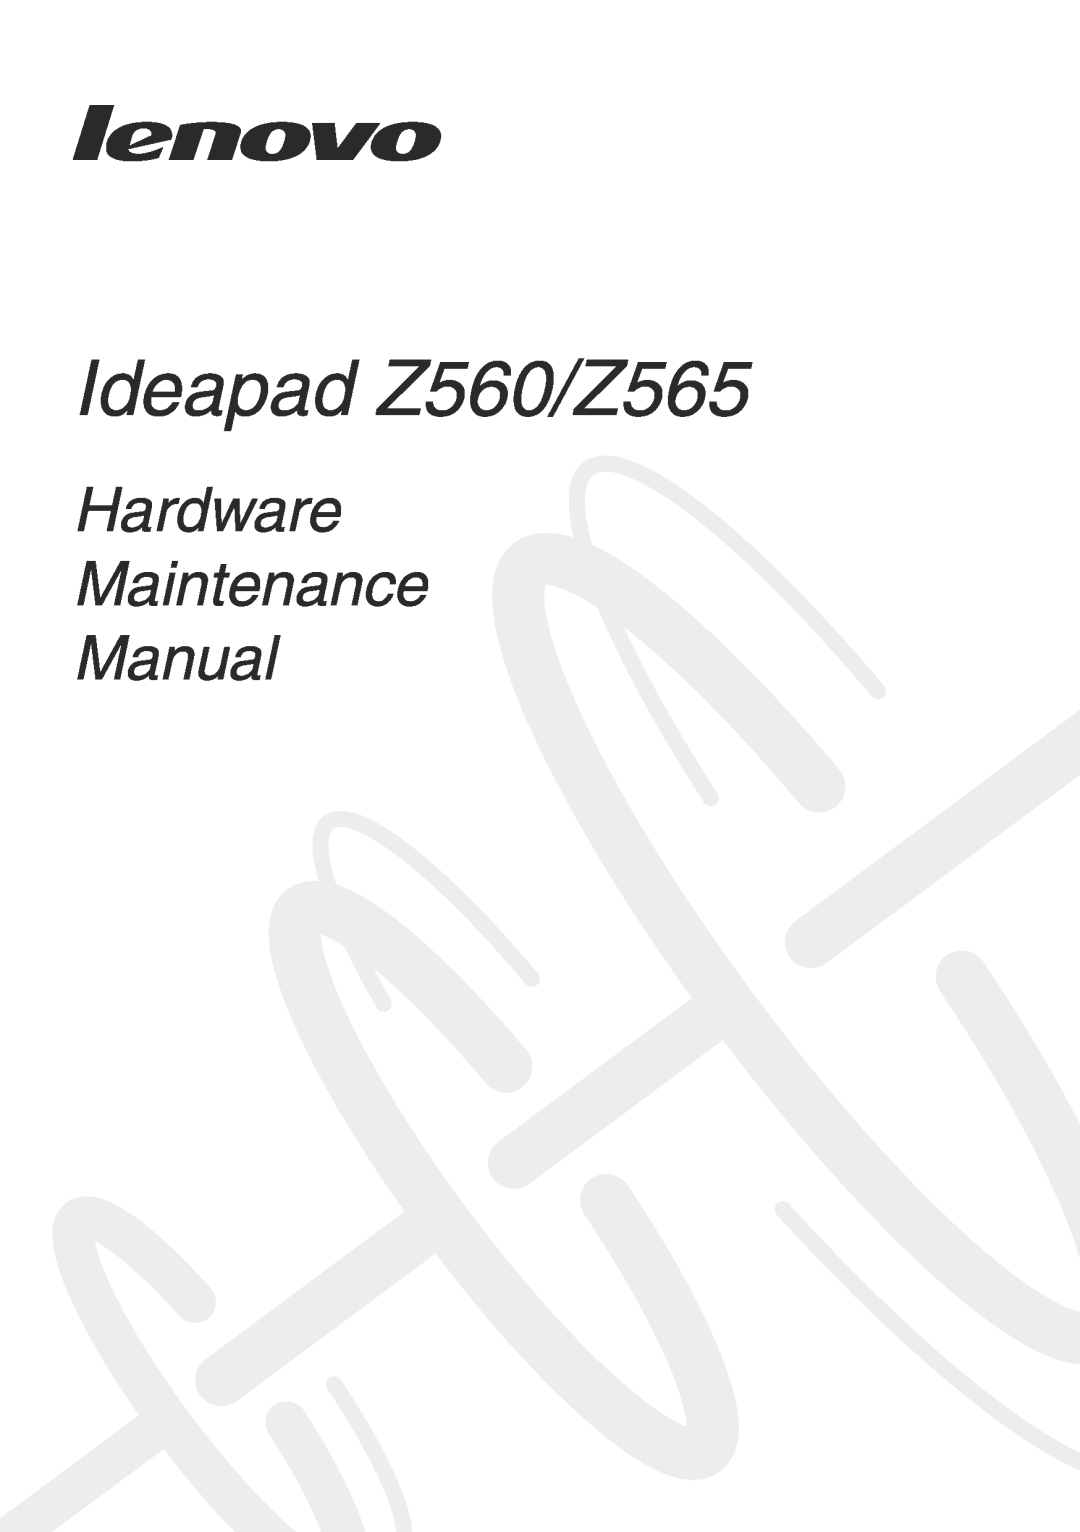 Lenovo manual Ideapad Z560/Z565, Hardware Maintenance Manual 